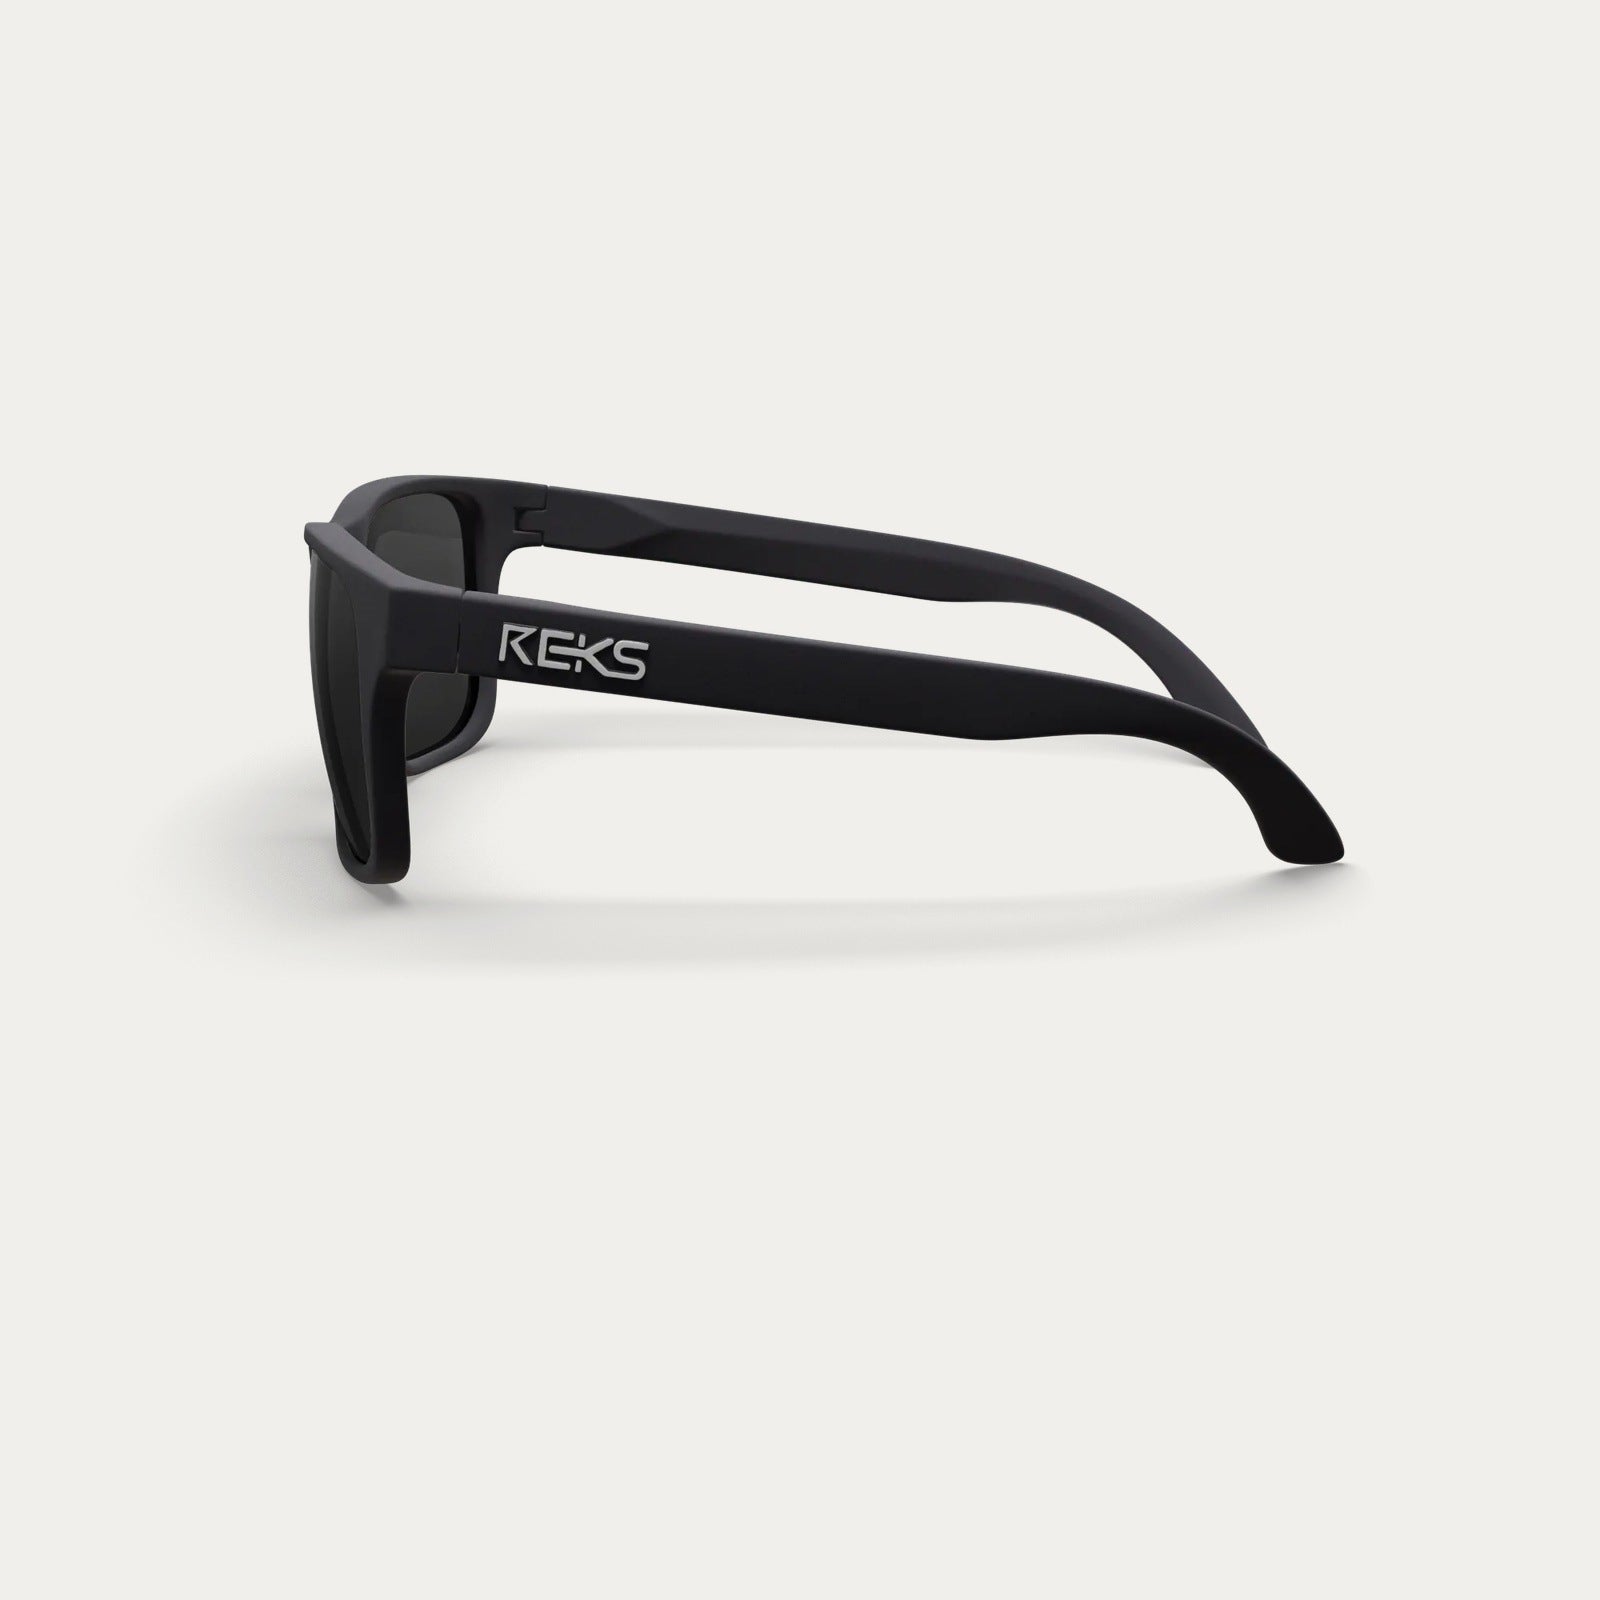 LESHP Sport Sunglasses For Men&Women,Uv Protection Polarized Big